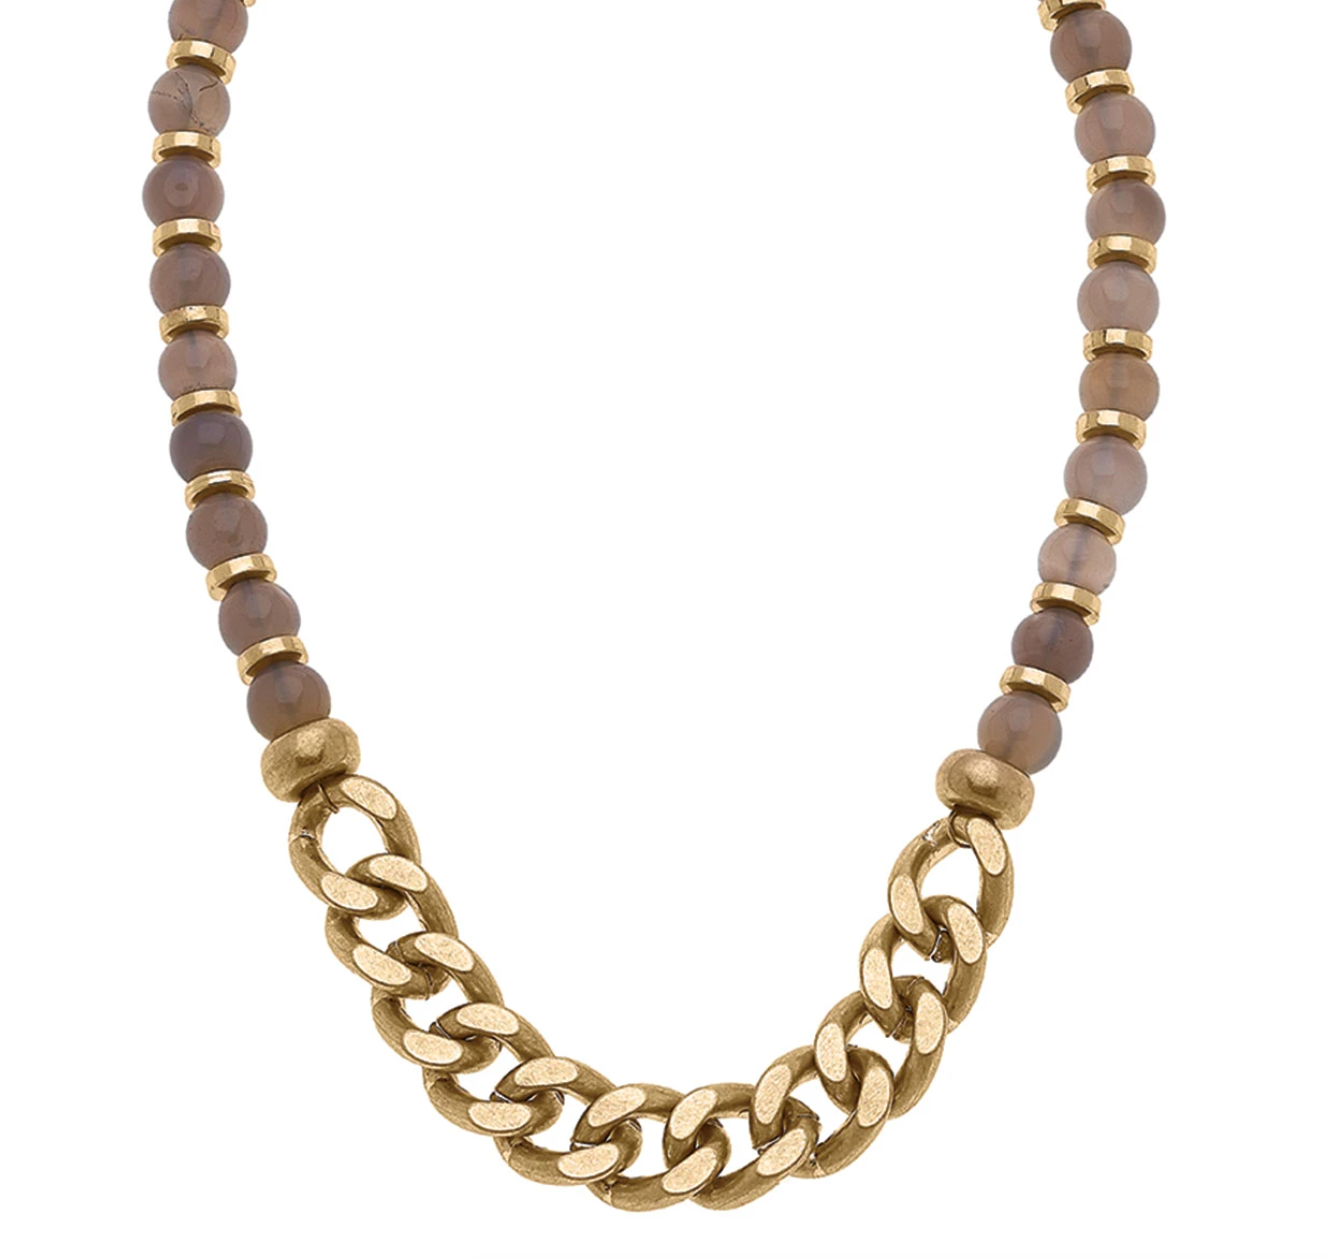 Georgia Gemstone & Chain Necklace